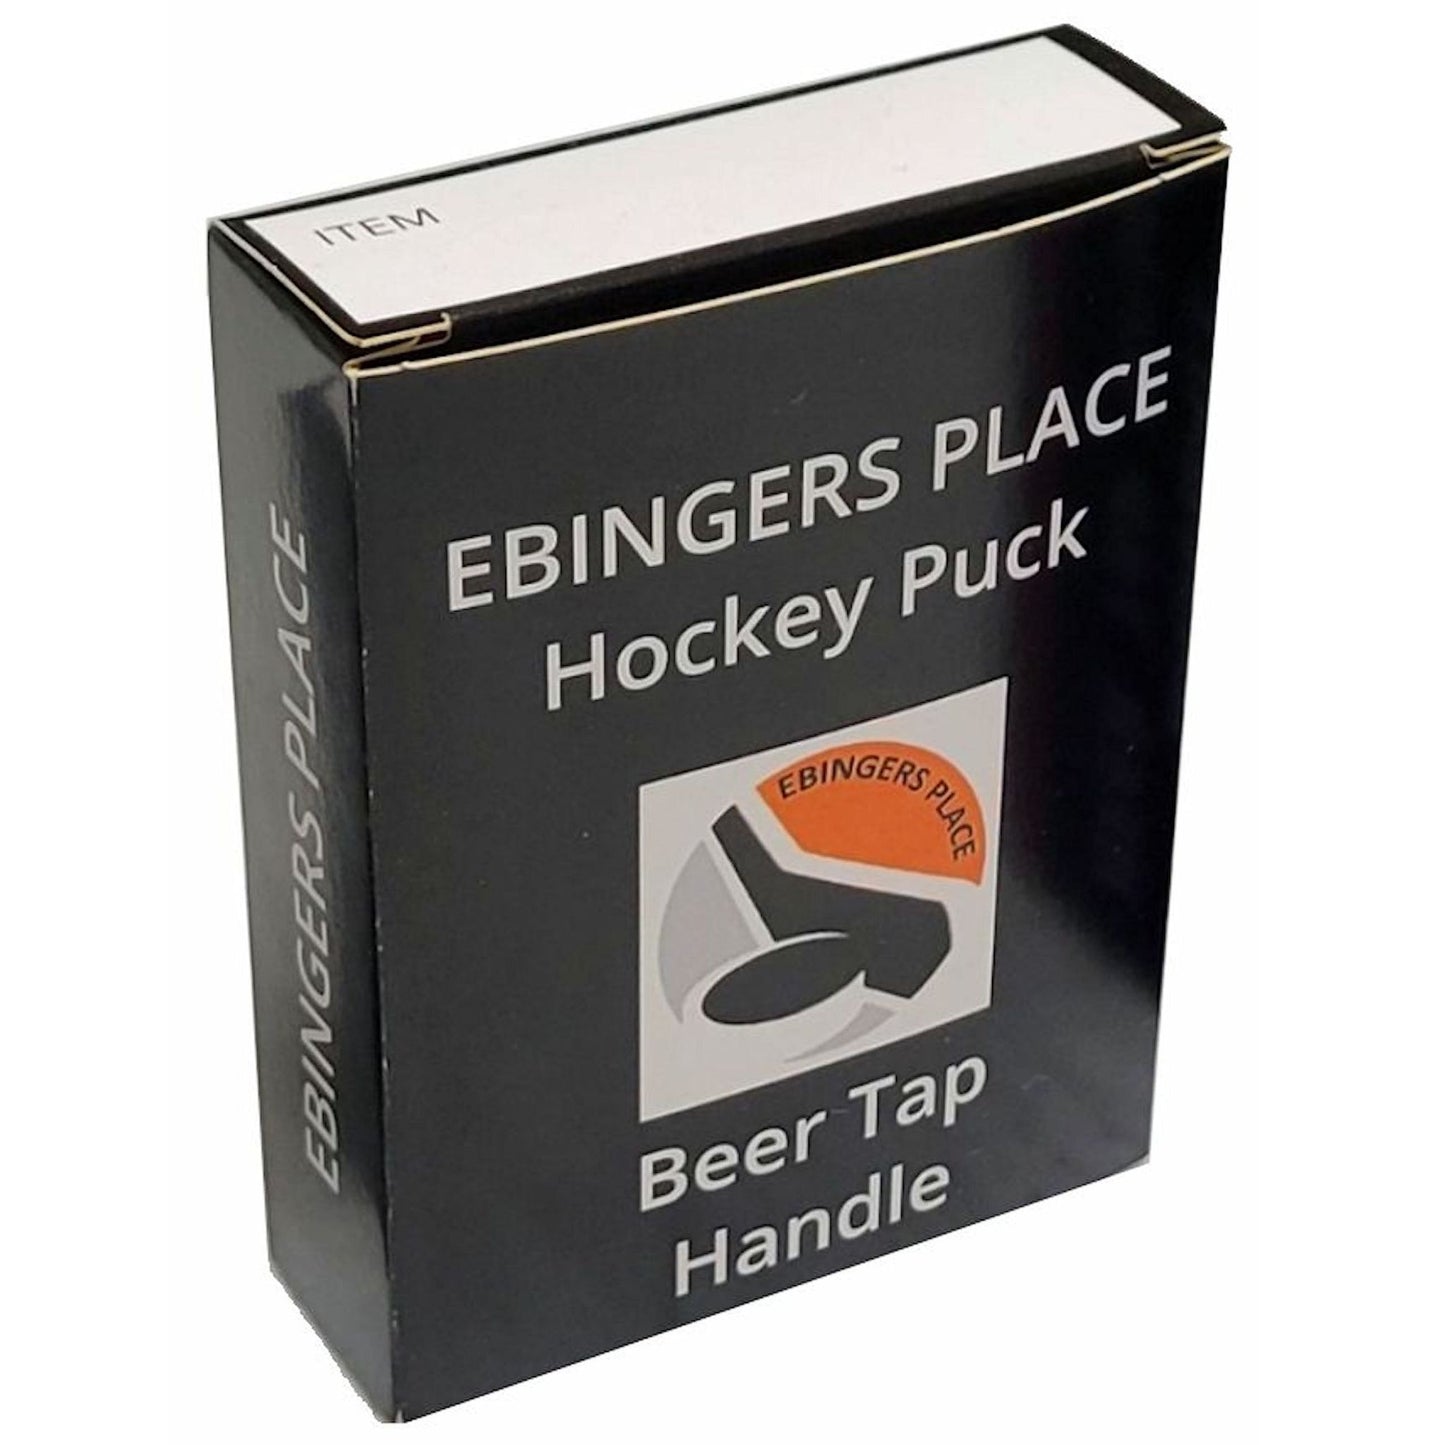 Chicago Blackhawks 2010 Stanley Cup Champions Hockey Puck Beer Tap Handle